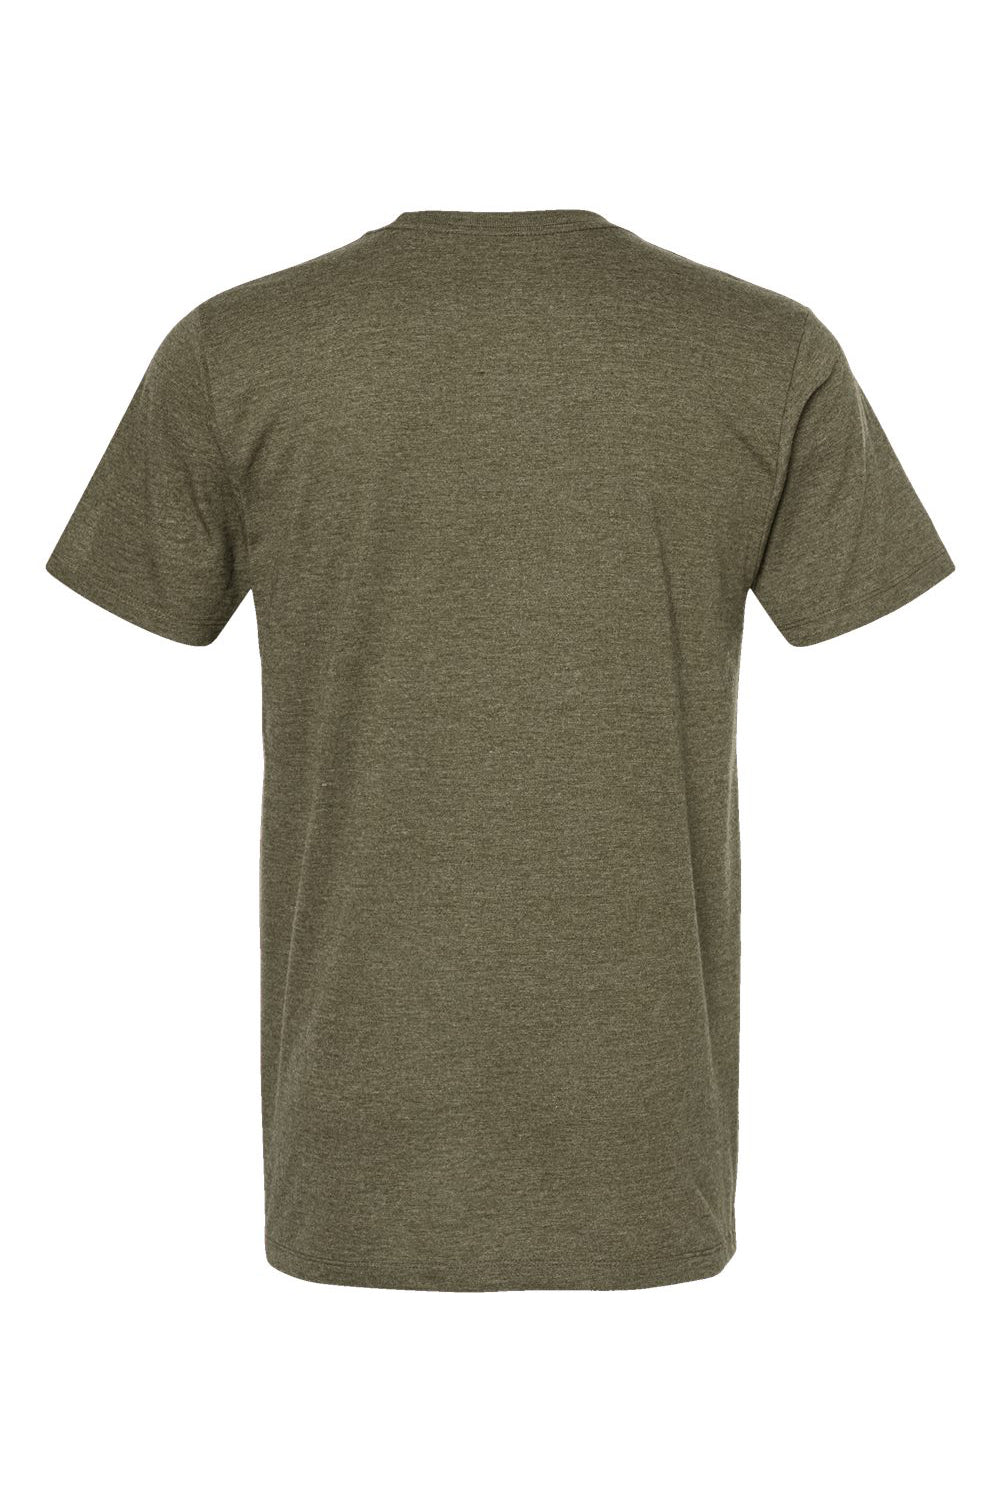 Tultex 541 Mens Premium Short Sleeve Crewneck T-Shirt Heather Olive Green Flat Back